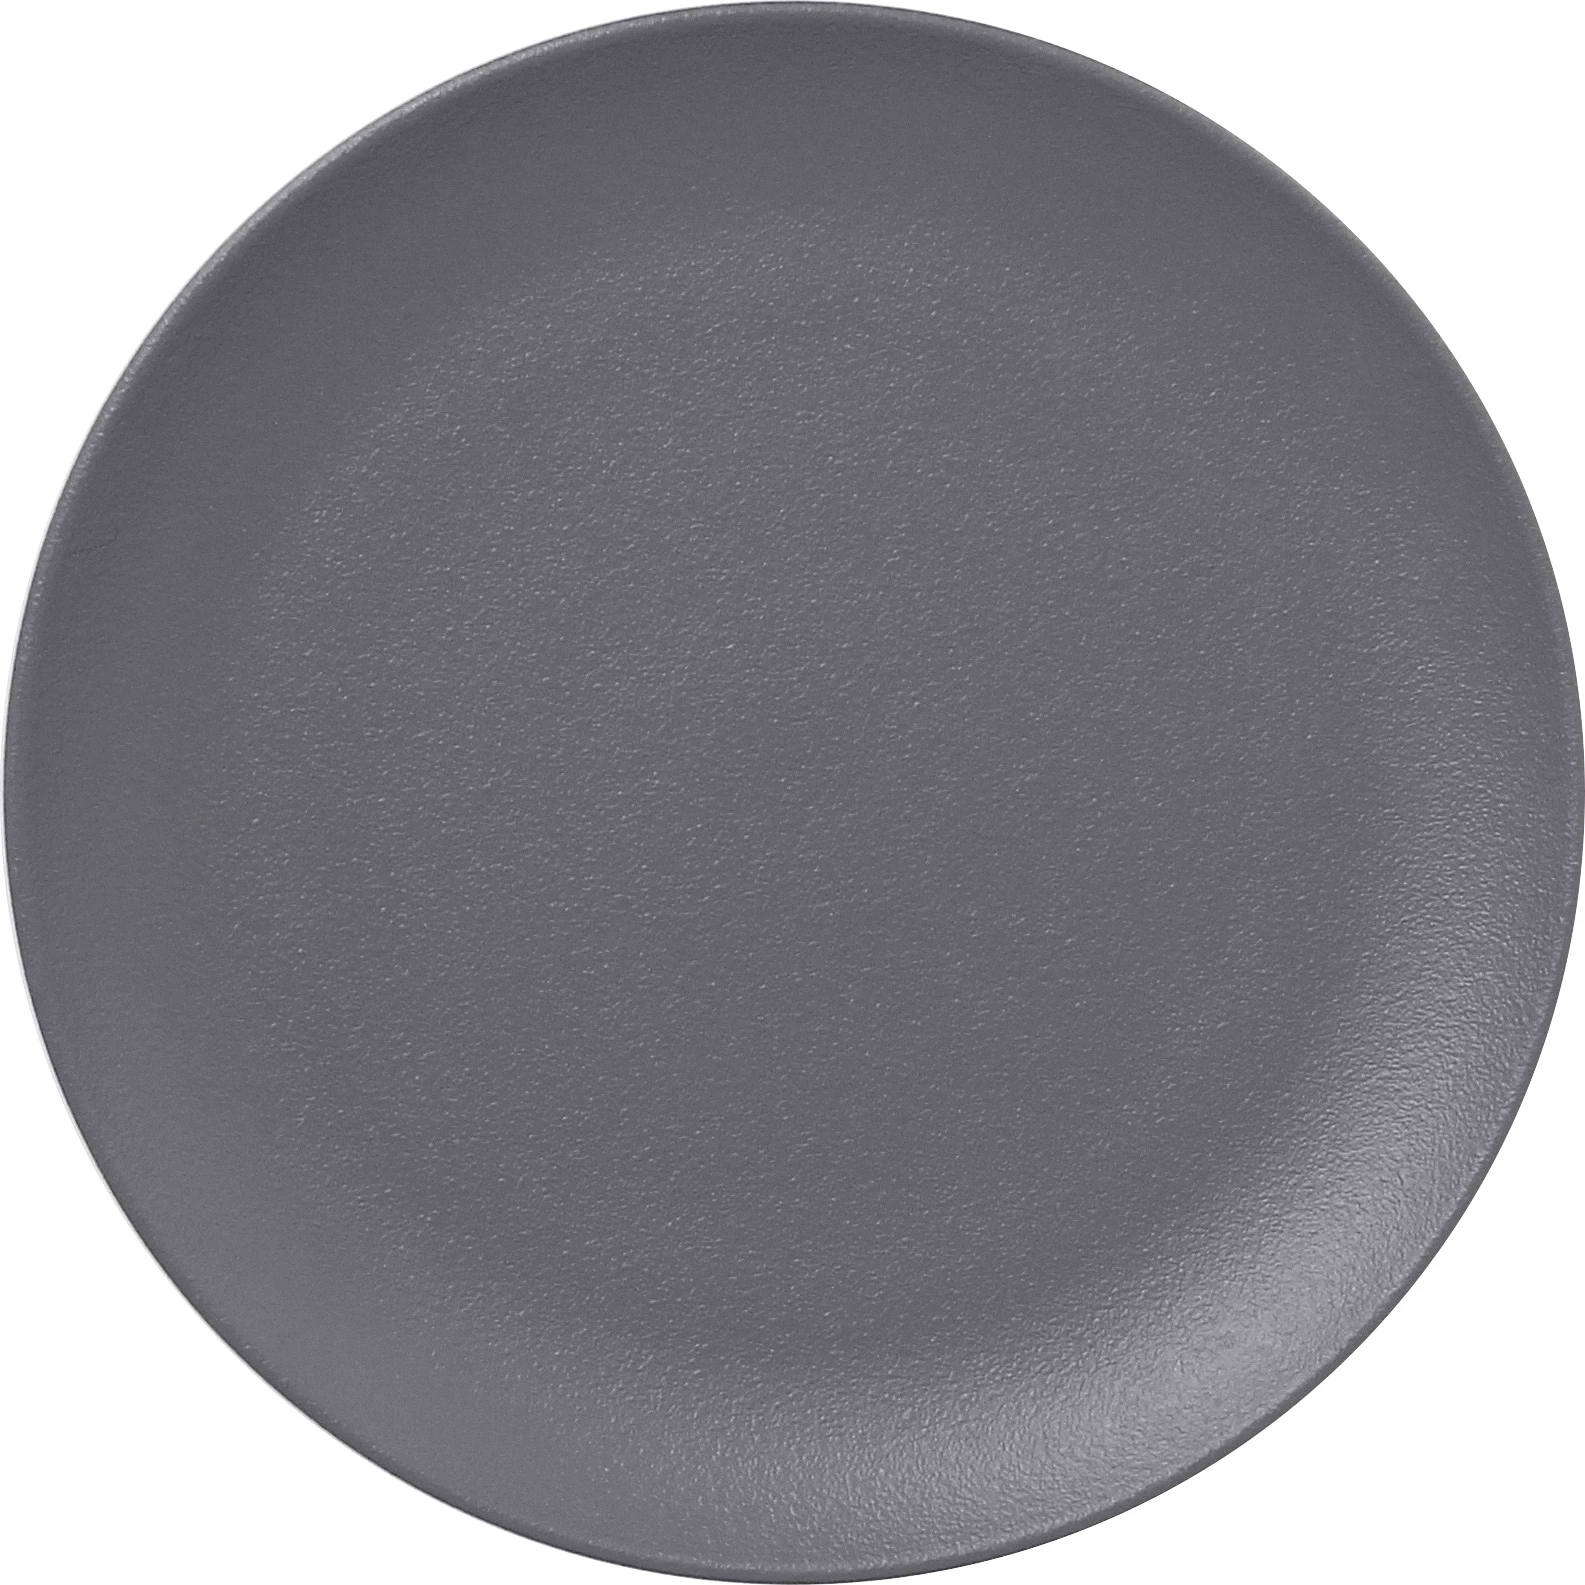 RAK Neofusion flad tallerken uden fane, grå, ø24 cm